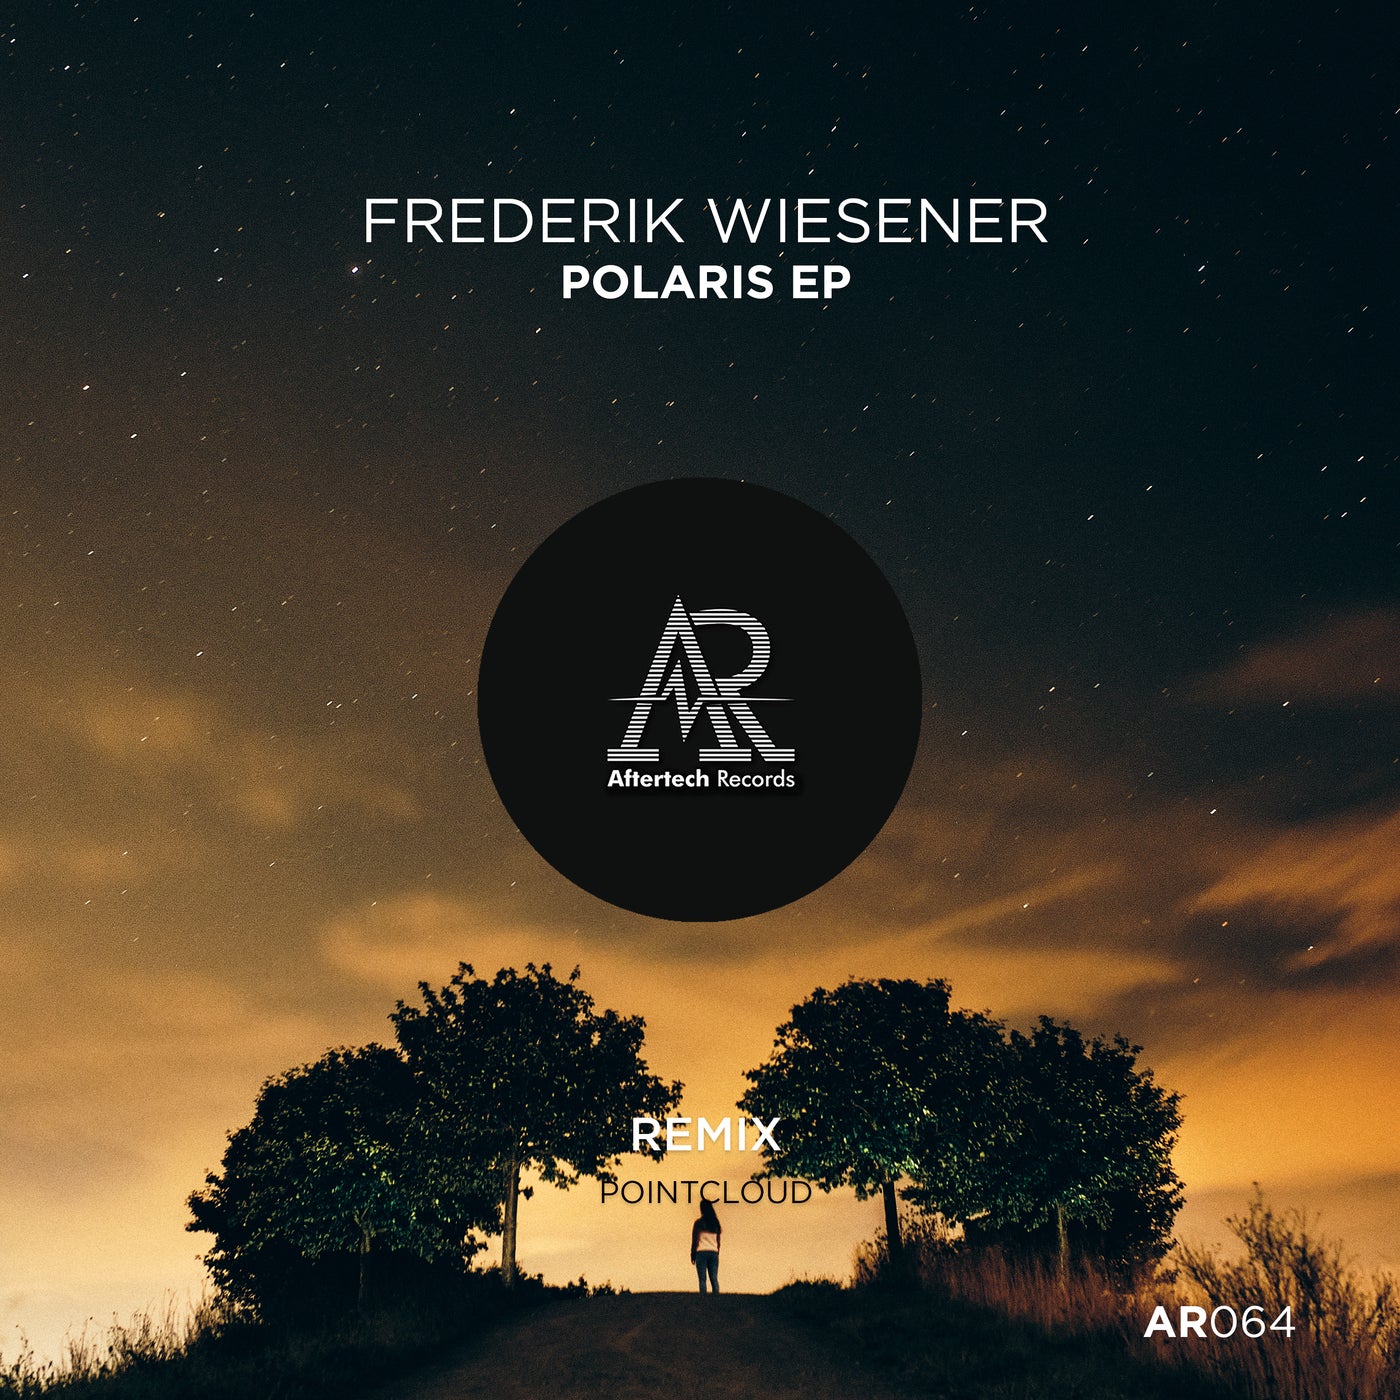 Frederik Wiesener - Polaris EP [AR064]